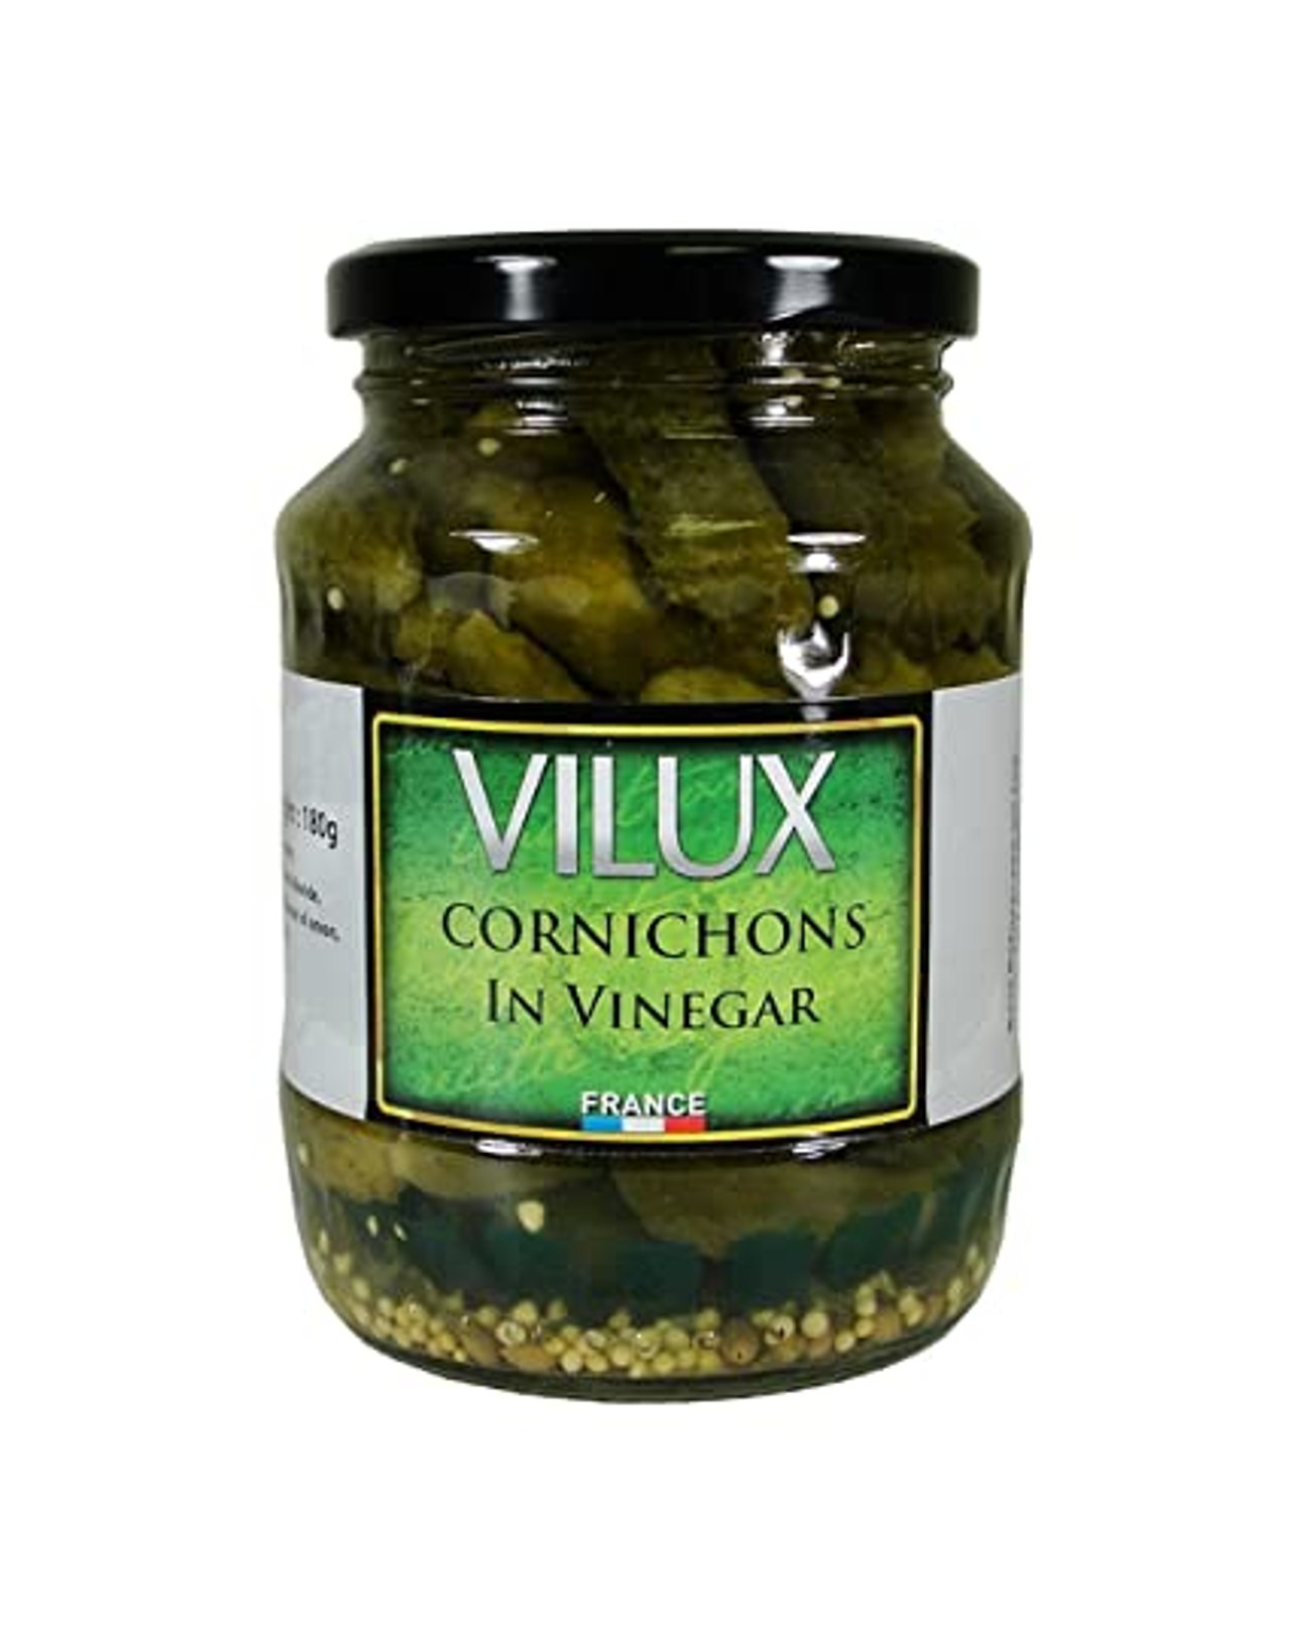 a jar of Vilux Cornichons in vinegar 180g (6.3 oz)